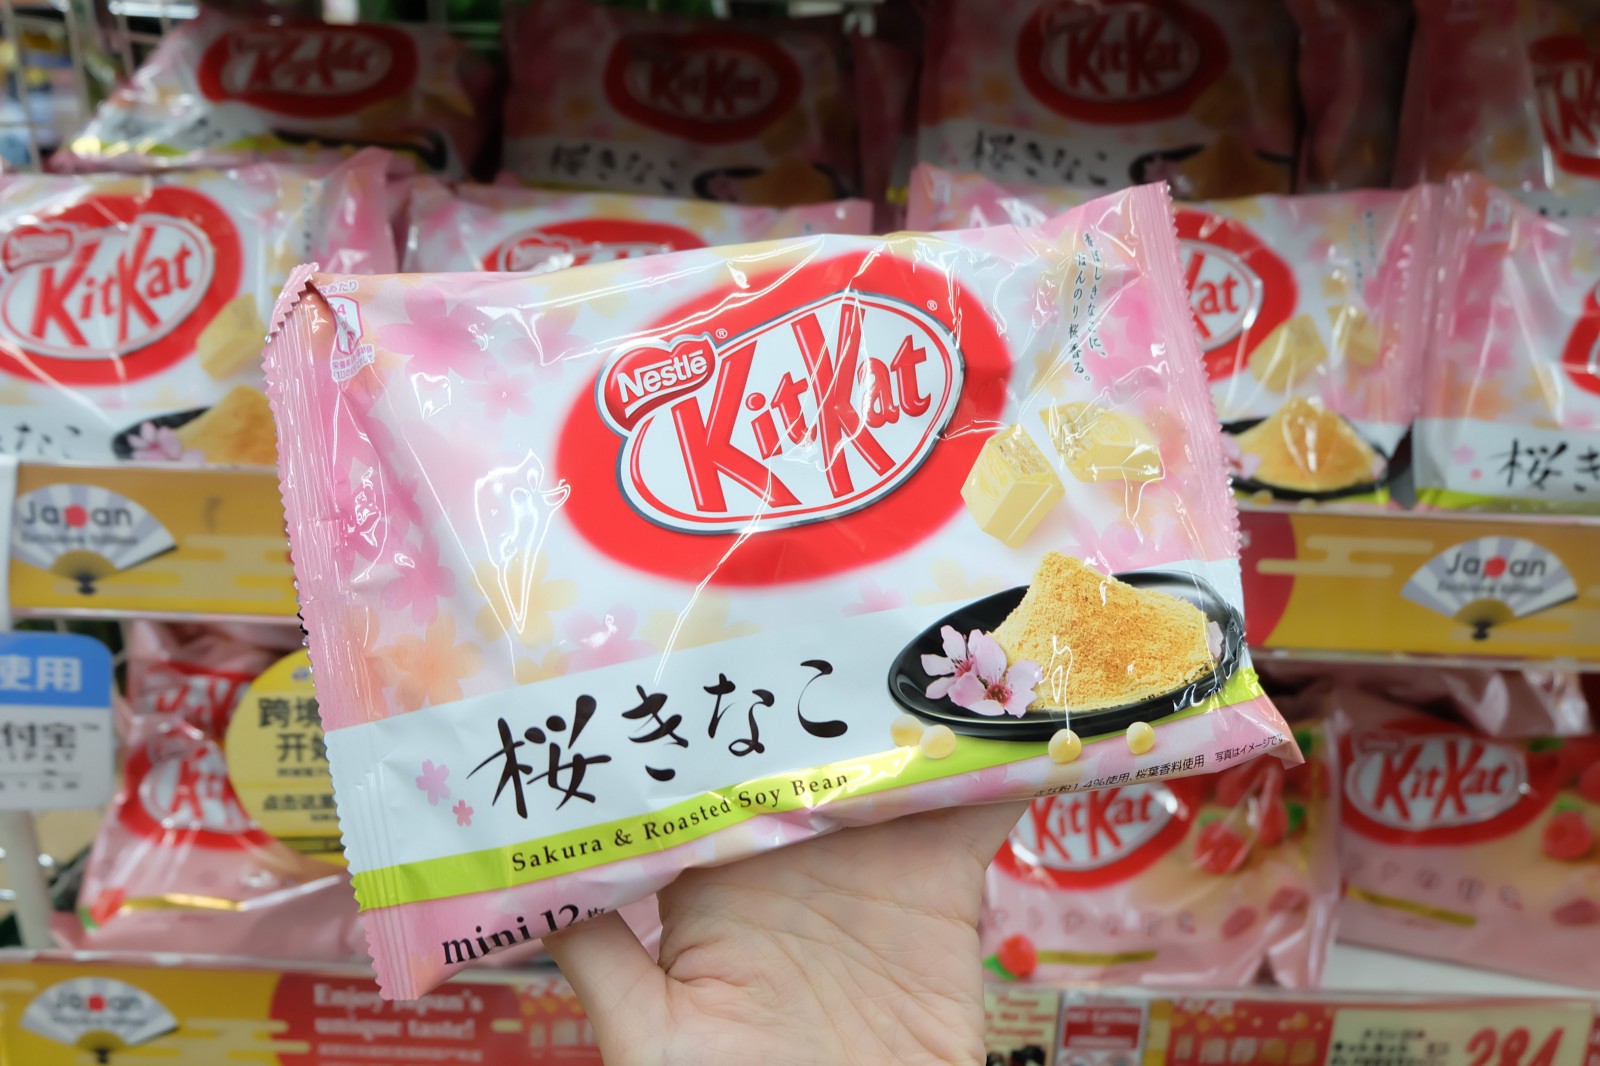 Combolist japan. КИТКАТ В Японии. Kitkat flavors. Китайский КИТКАТ. Kit kats in Japan.